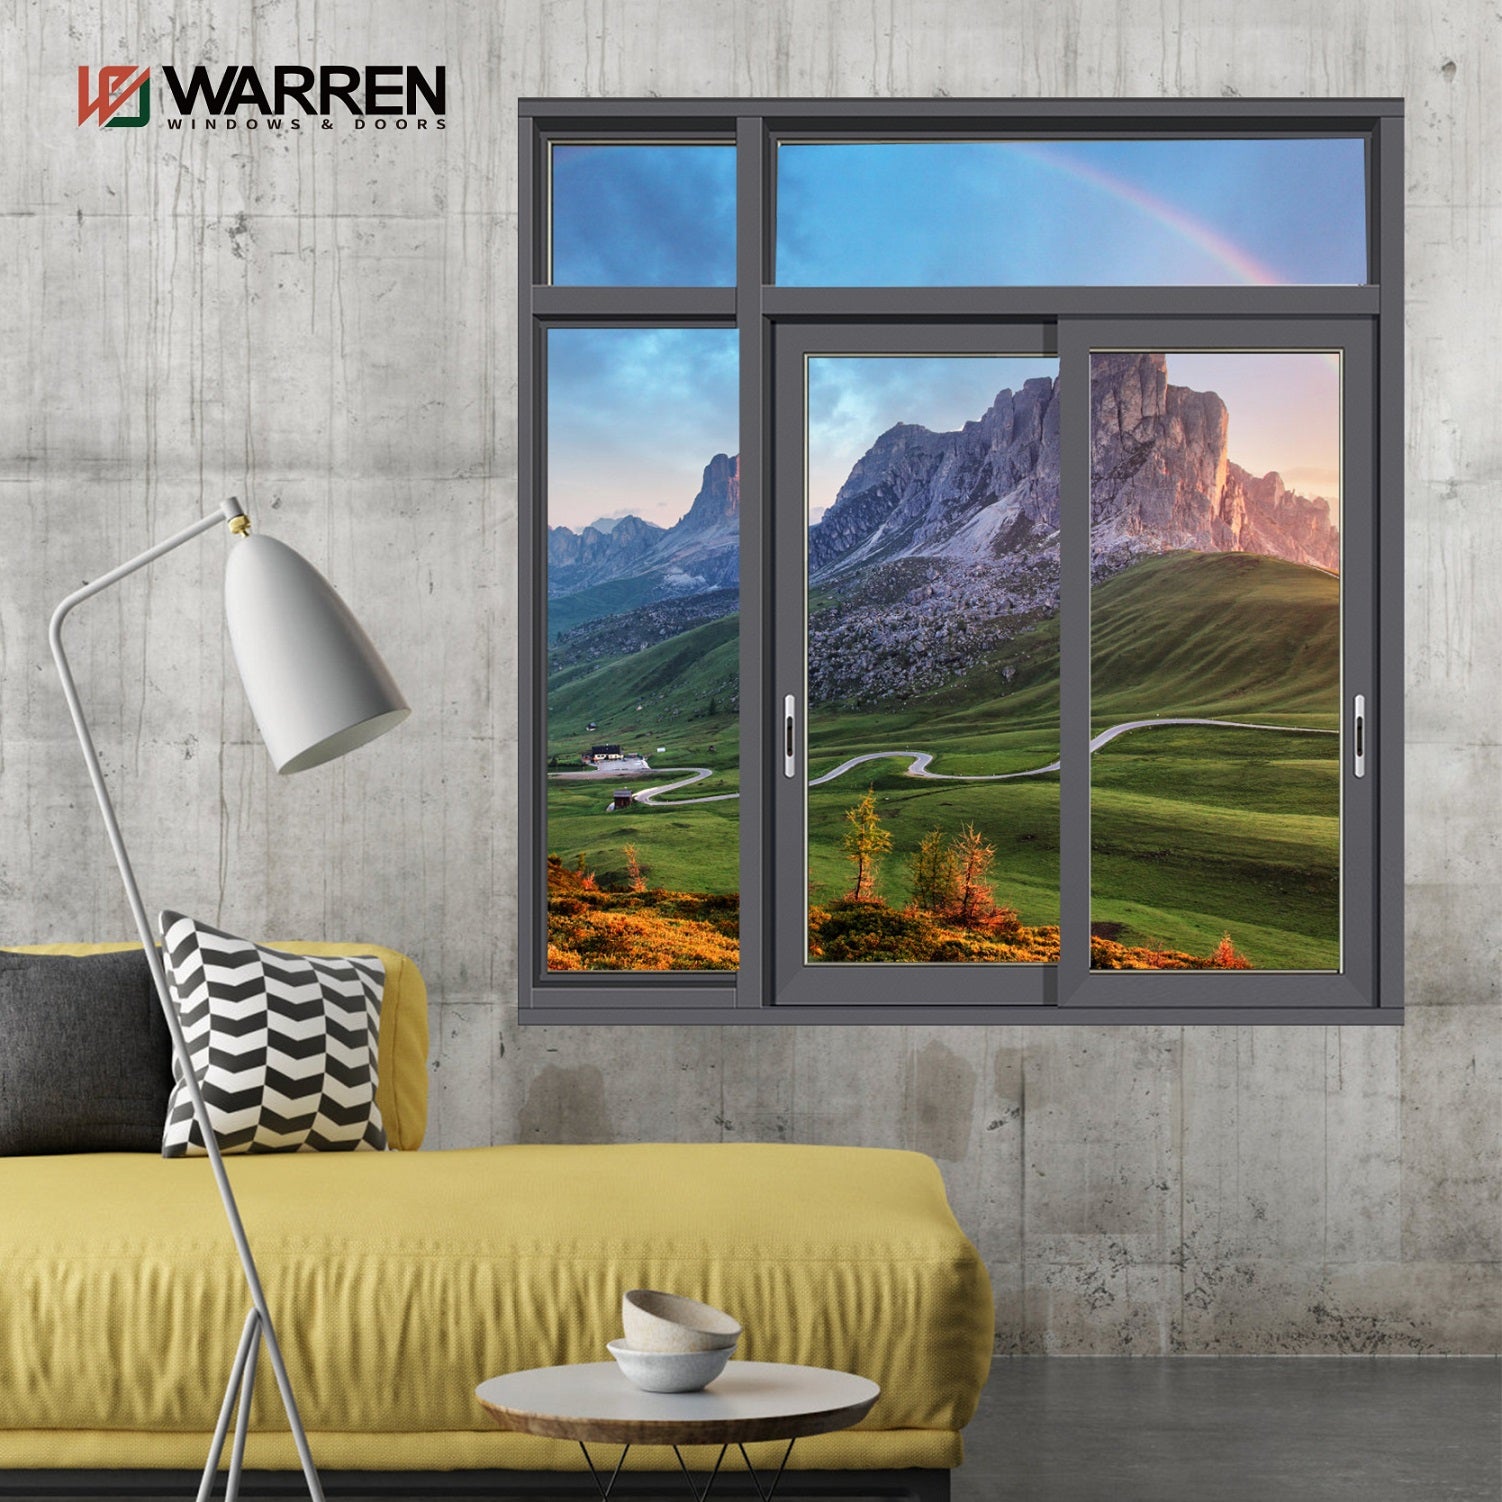 Warren 36x36 window double glazed 3 track aluminium sliding windows and doors with Cheap Price